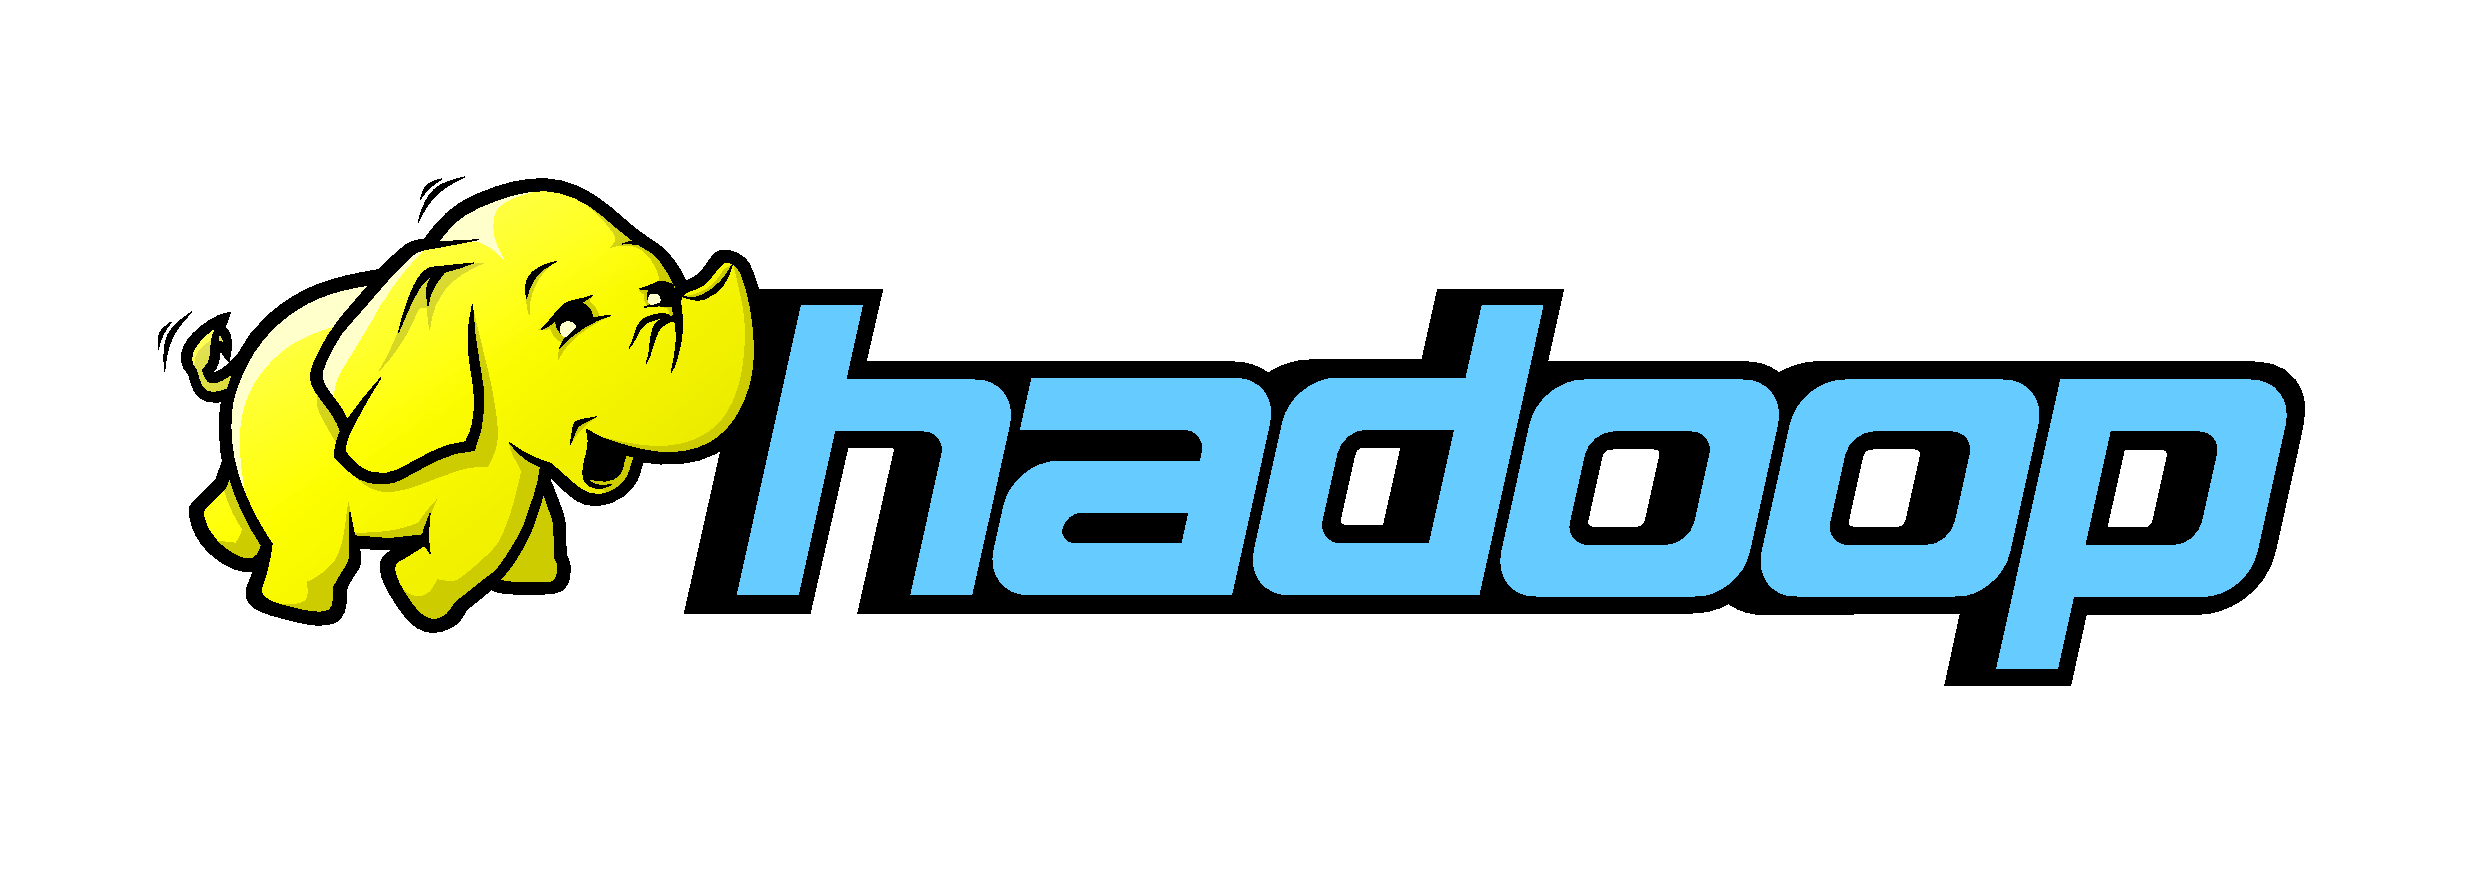 HDFS Logo - How To Setup Apache Hadoop On CentOS